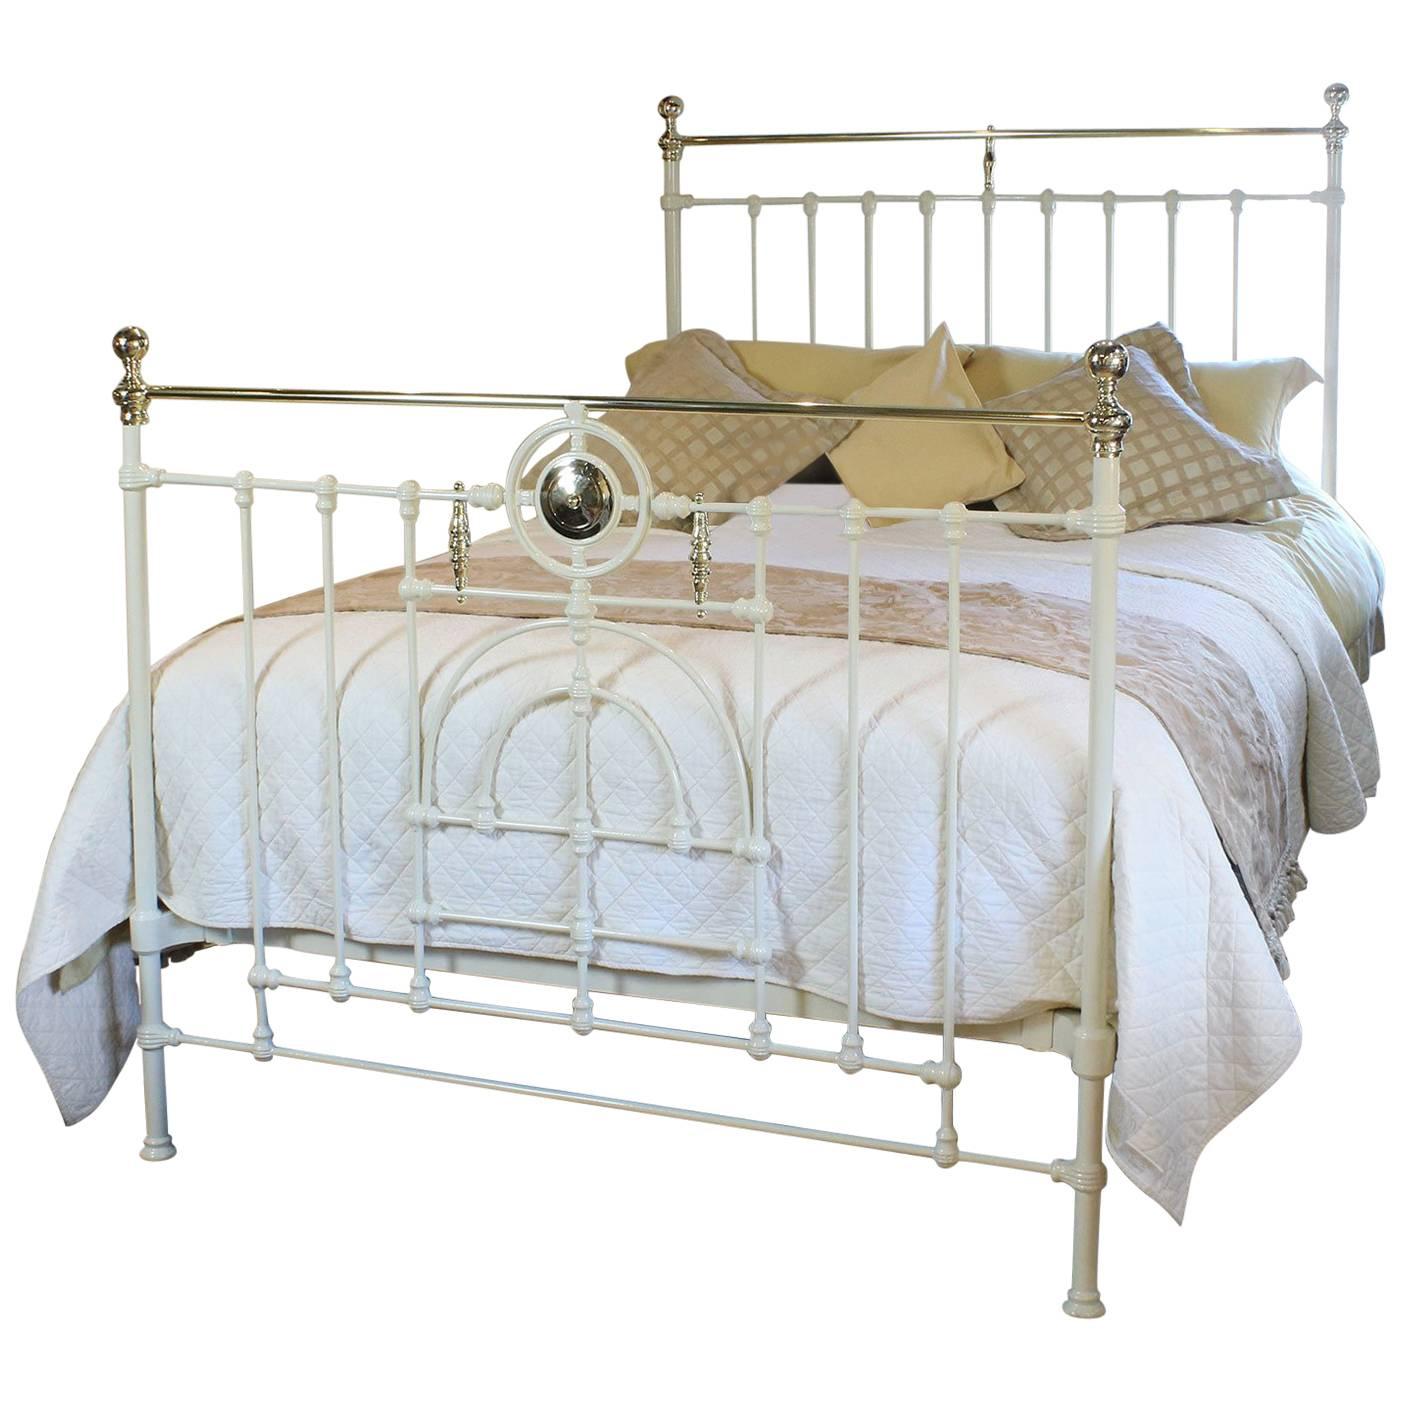 Decorative Cream Brass and Iron Bed, MK133